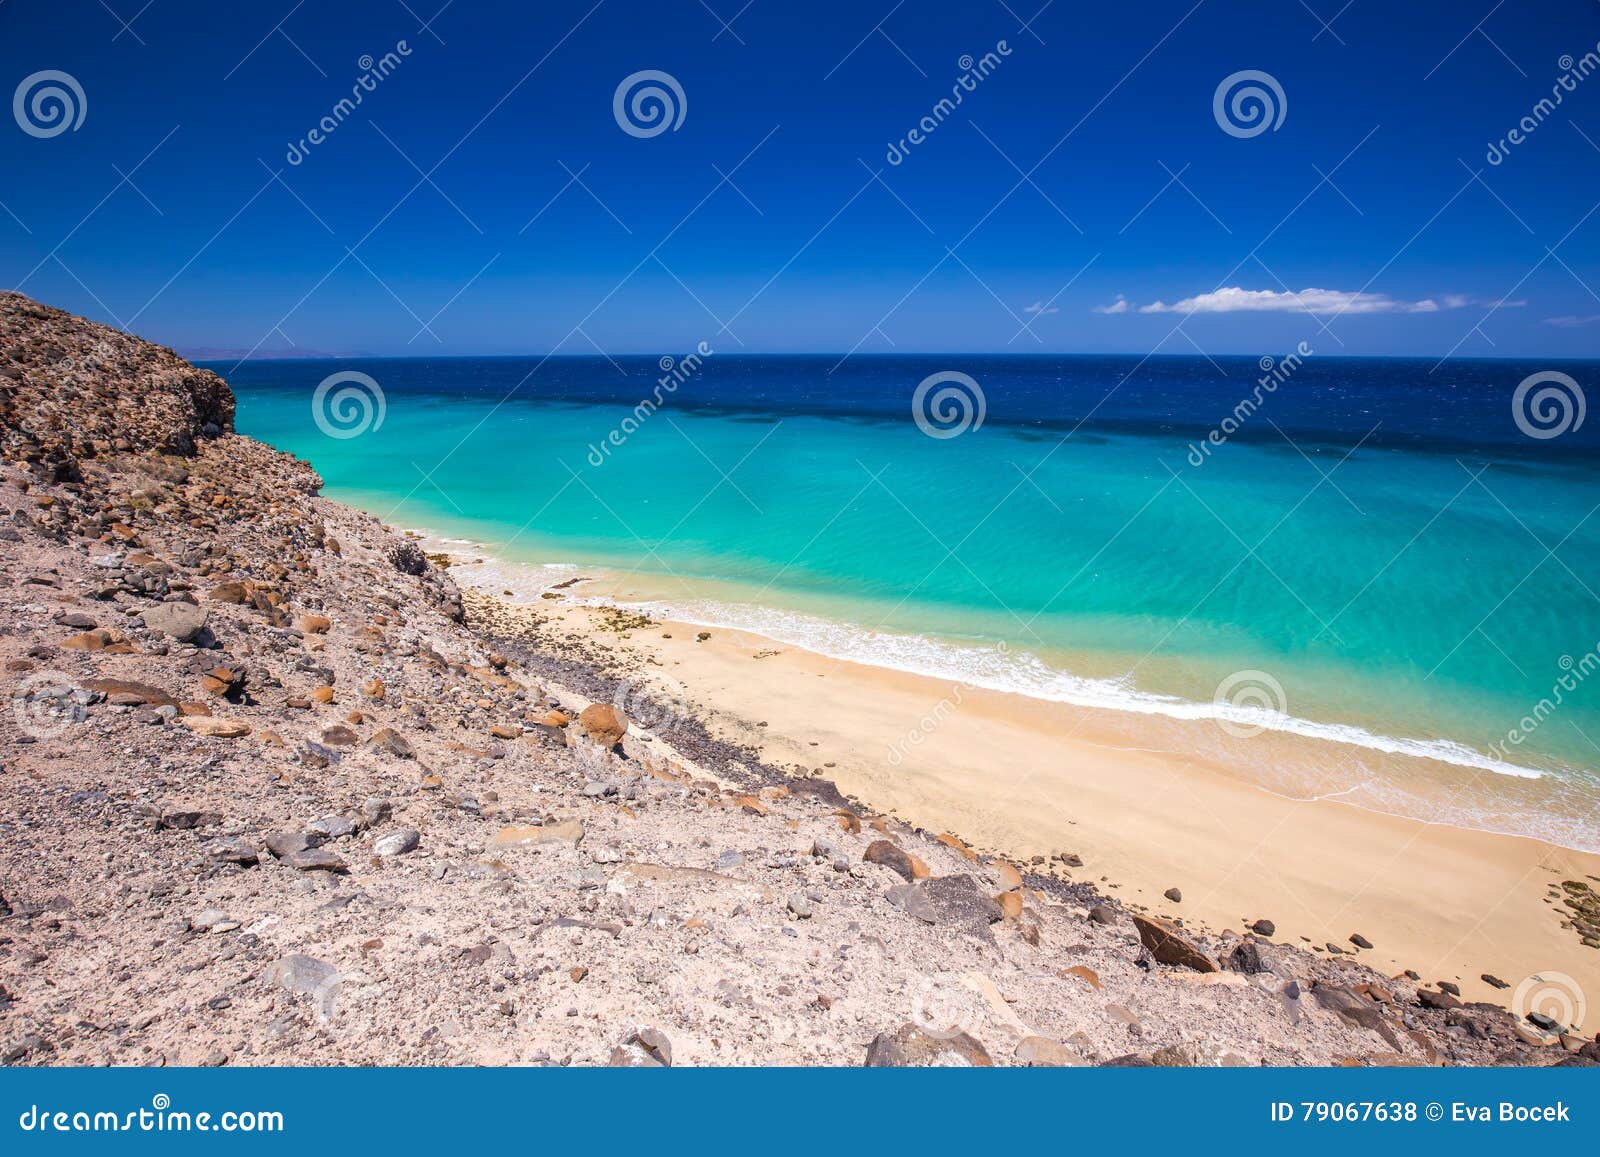 esquinzo sandy beach with vulcanic mountains, jandia, fuerteventura, canary islands, spain